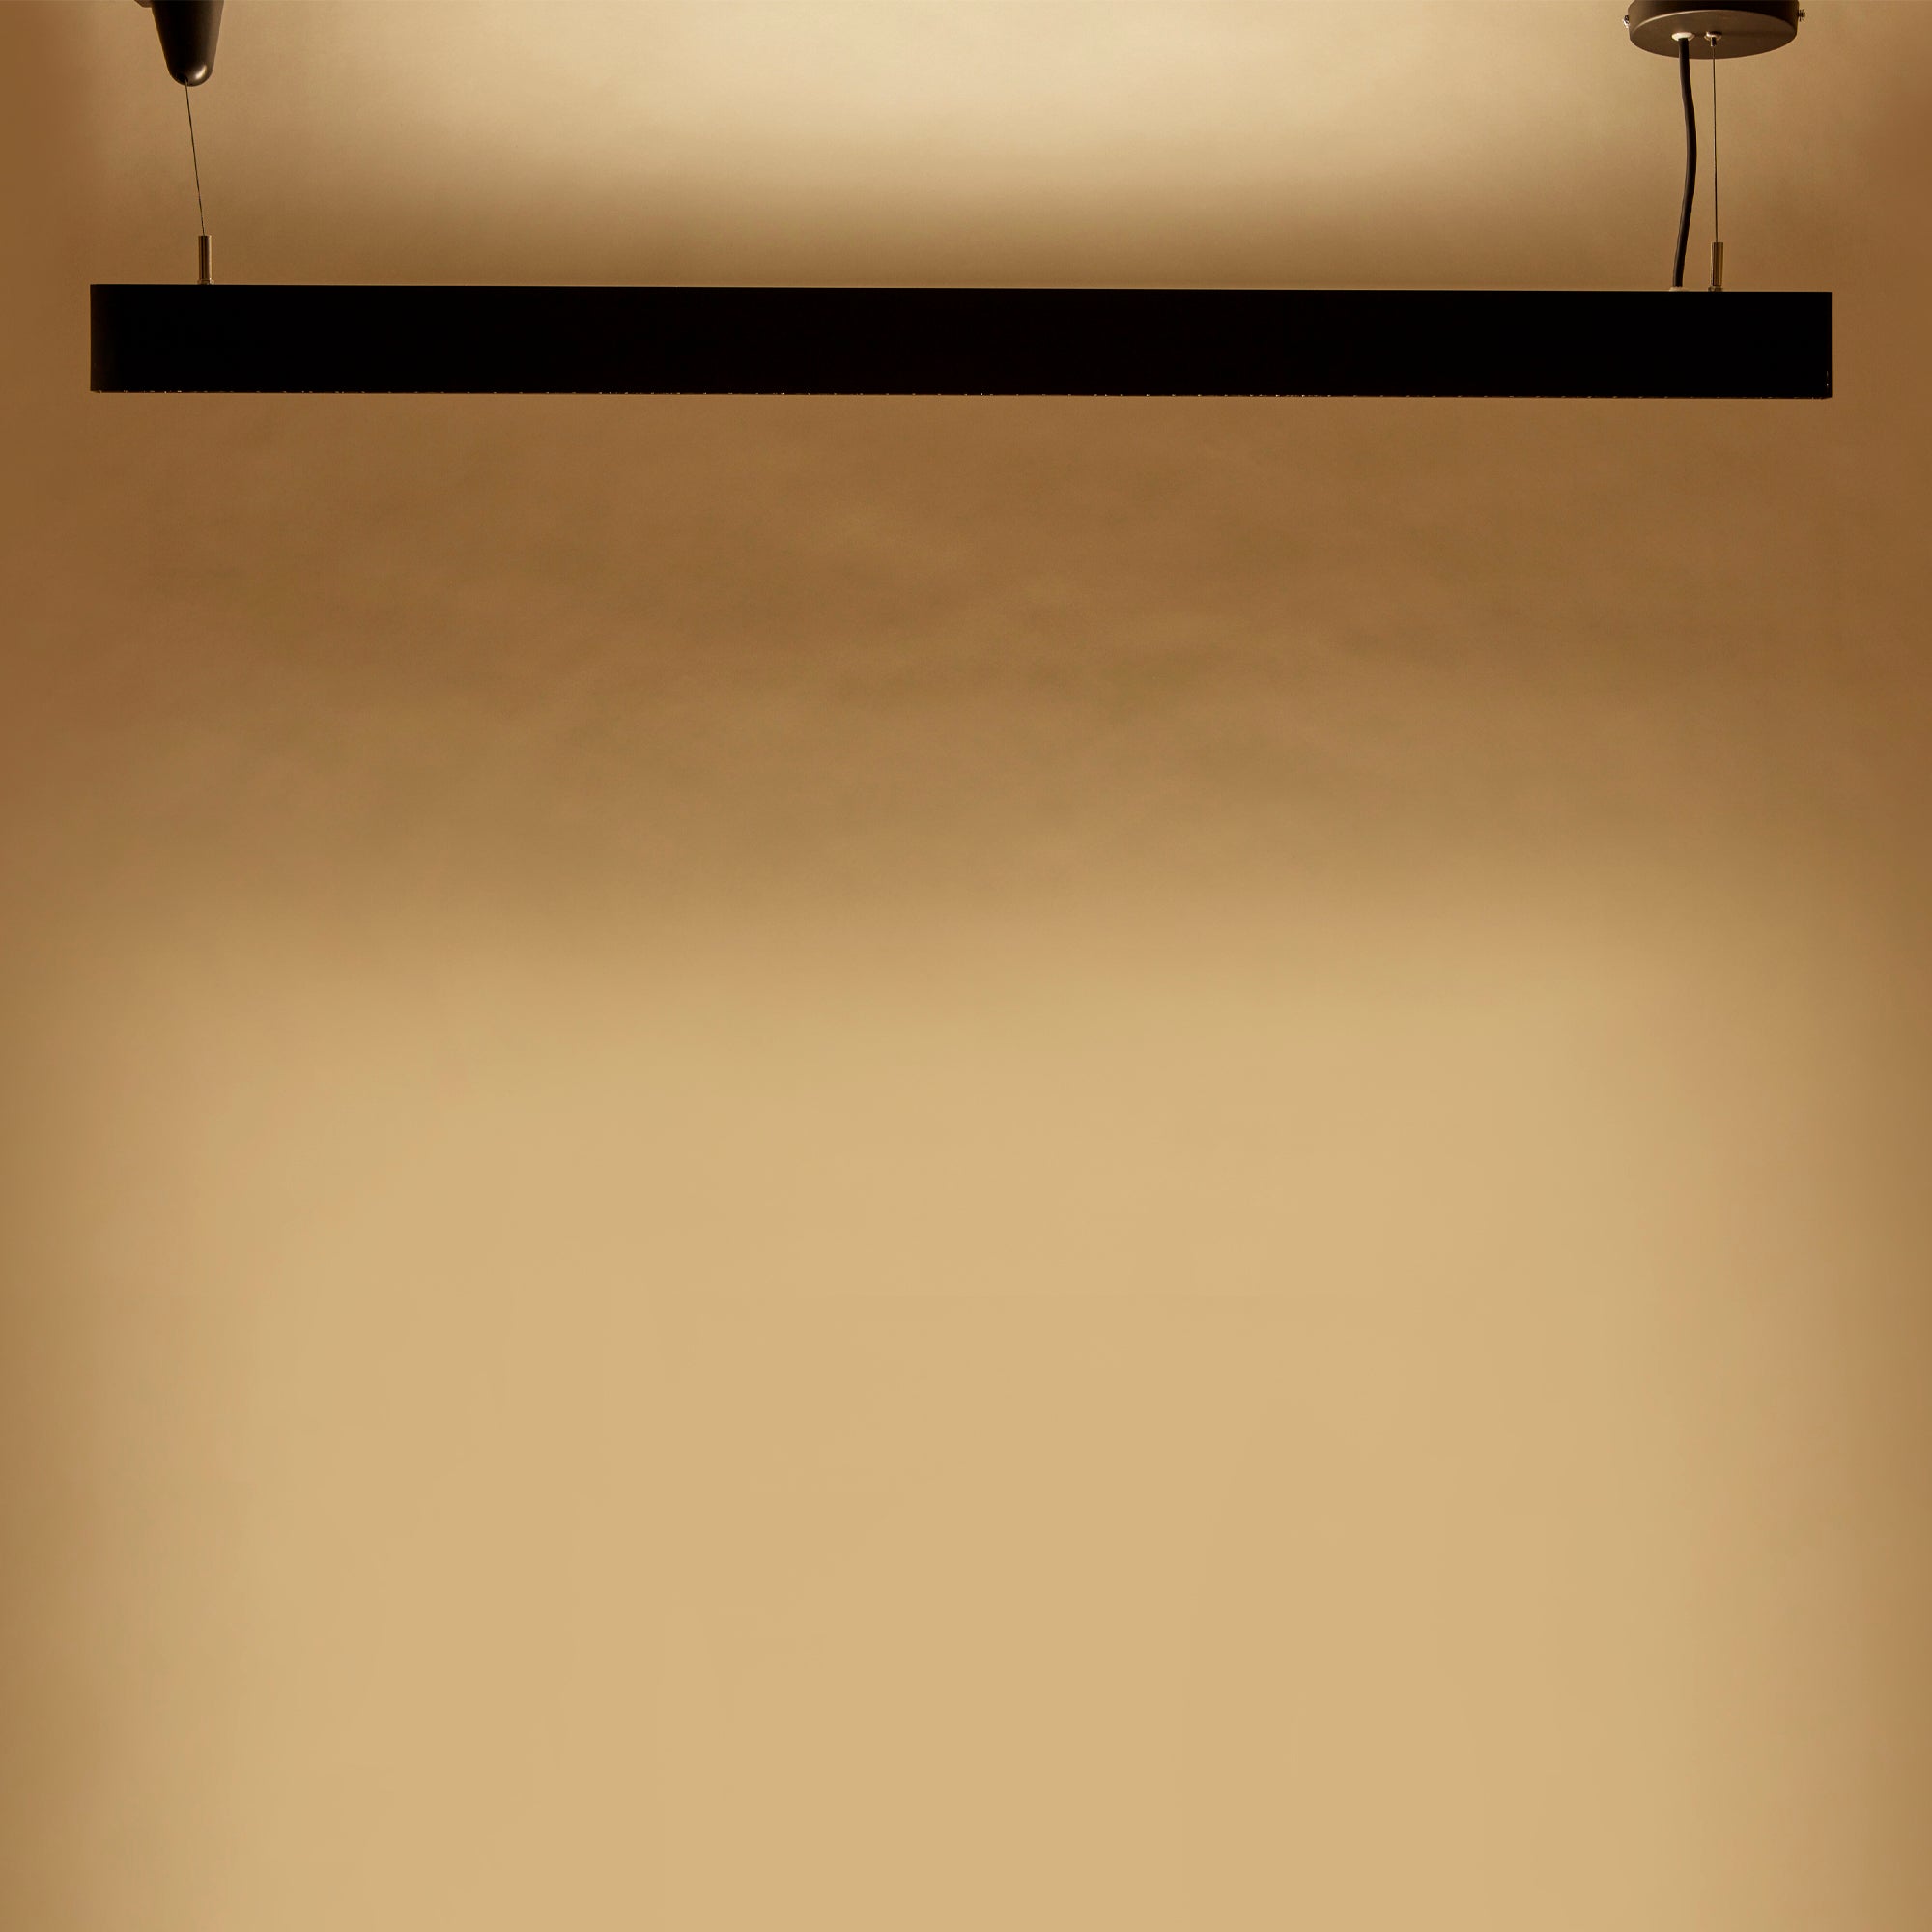 Luminaria LED RASTER DUPLO Antideslumbramiento para Suspender TL-1344 The Collection